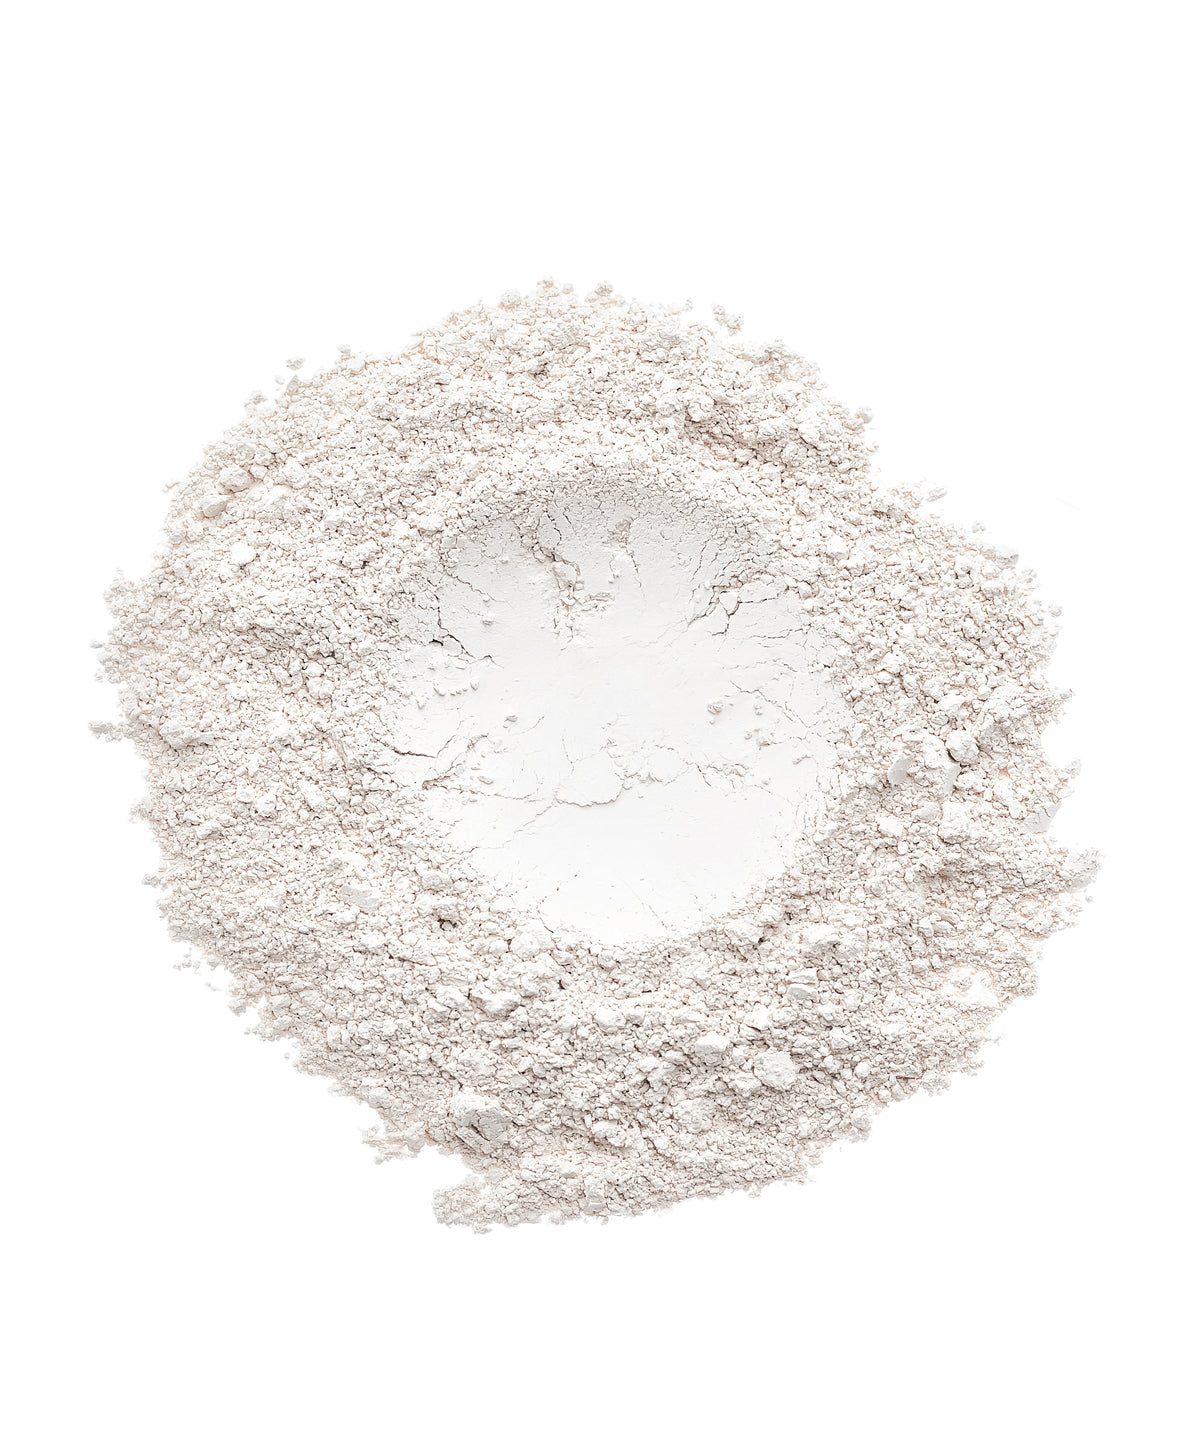 100% Pure Natural Freshwater Super Fine Pearl Powder Skin Care Powder 100g  